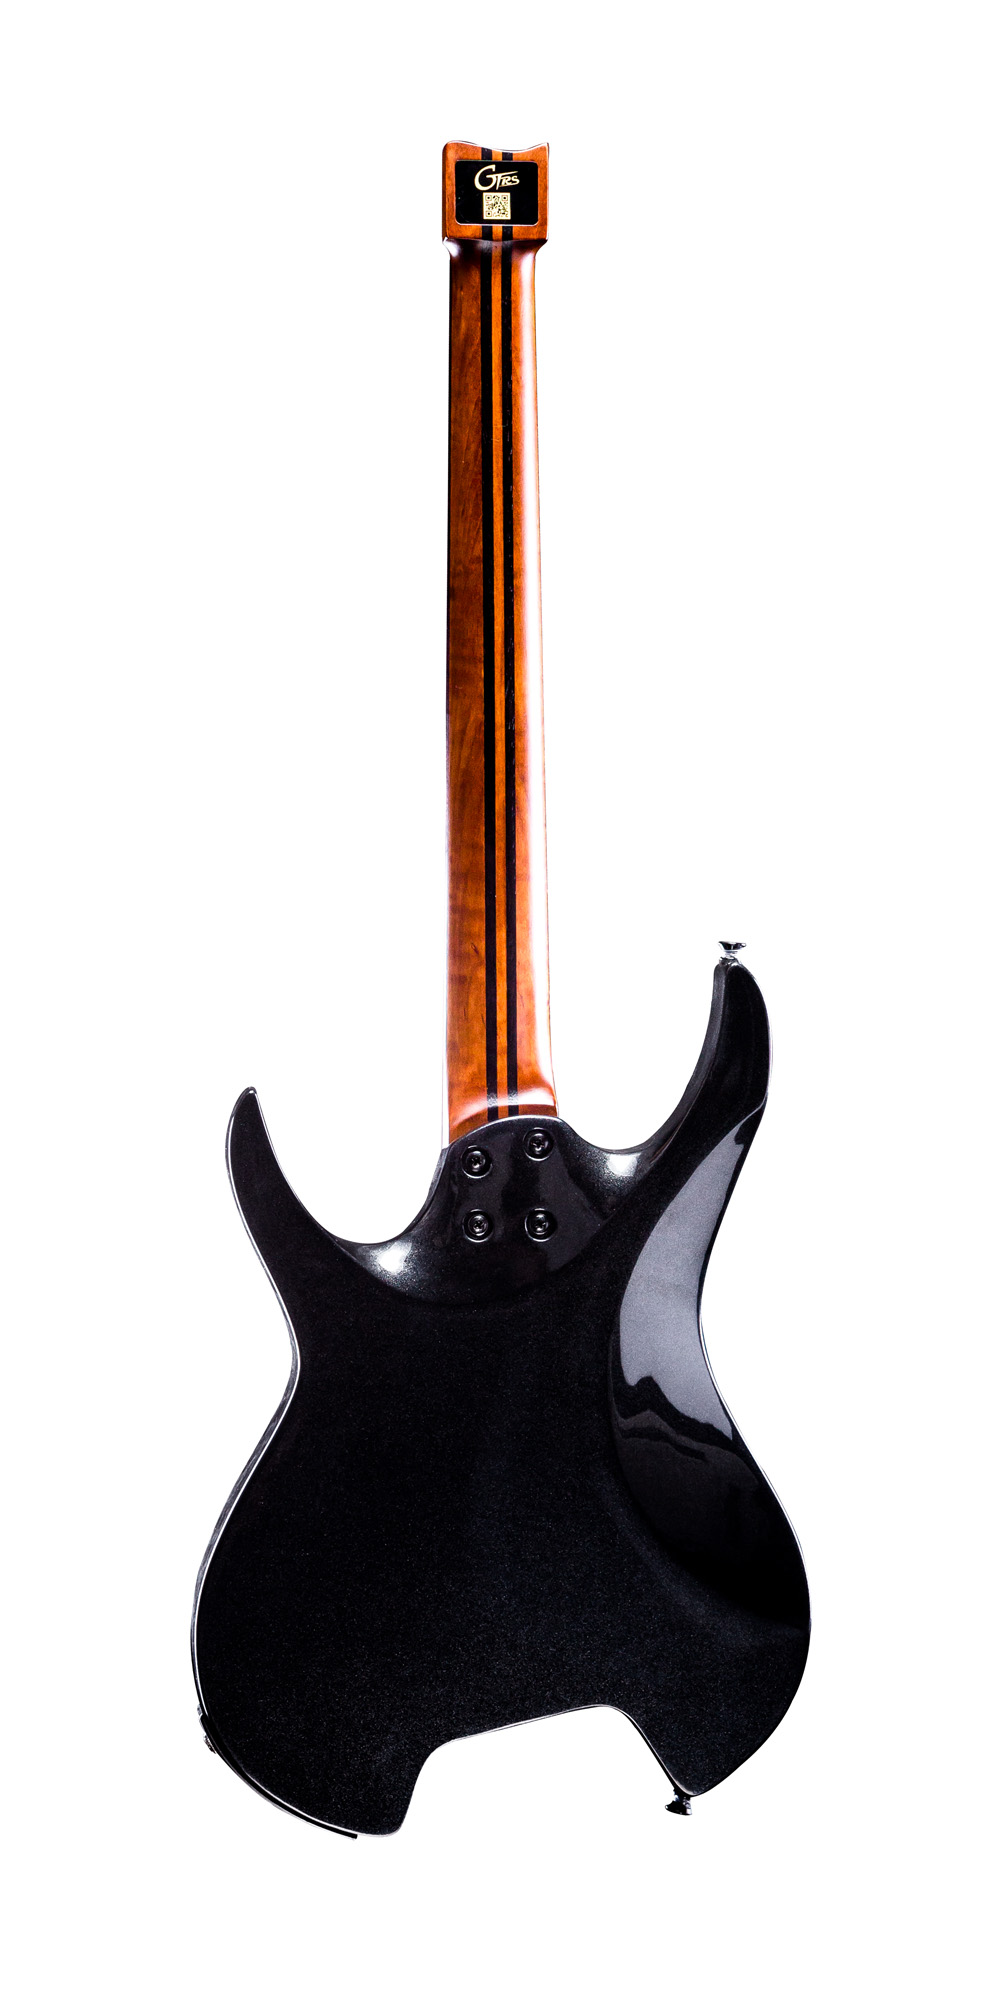 Mooer Gtrs W800 Pro Intelligent Guitar Hh Ht Rw - Pearl Black - Modeling guitar - Variation 1